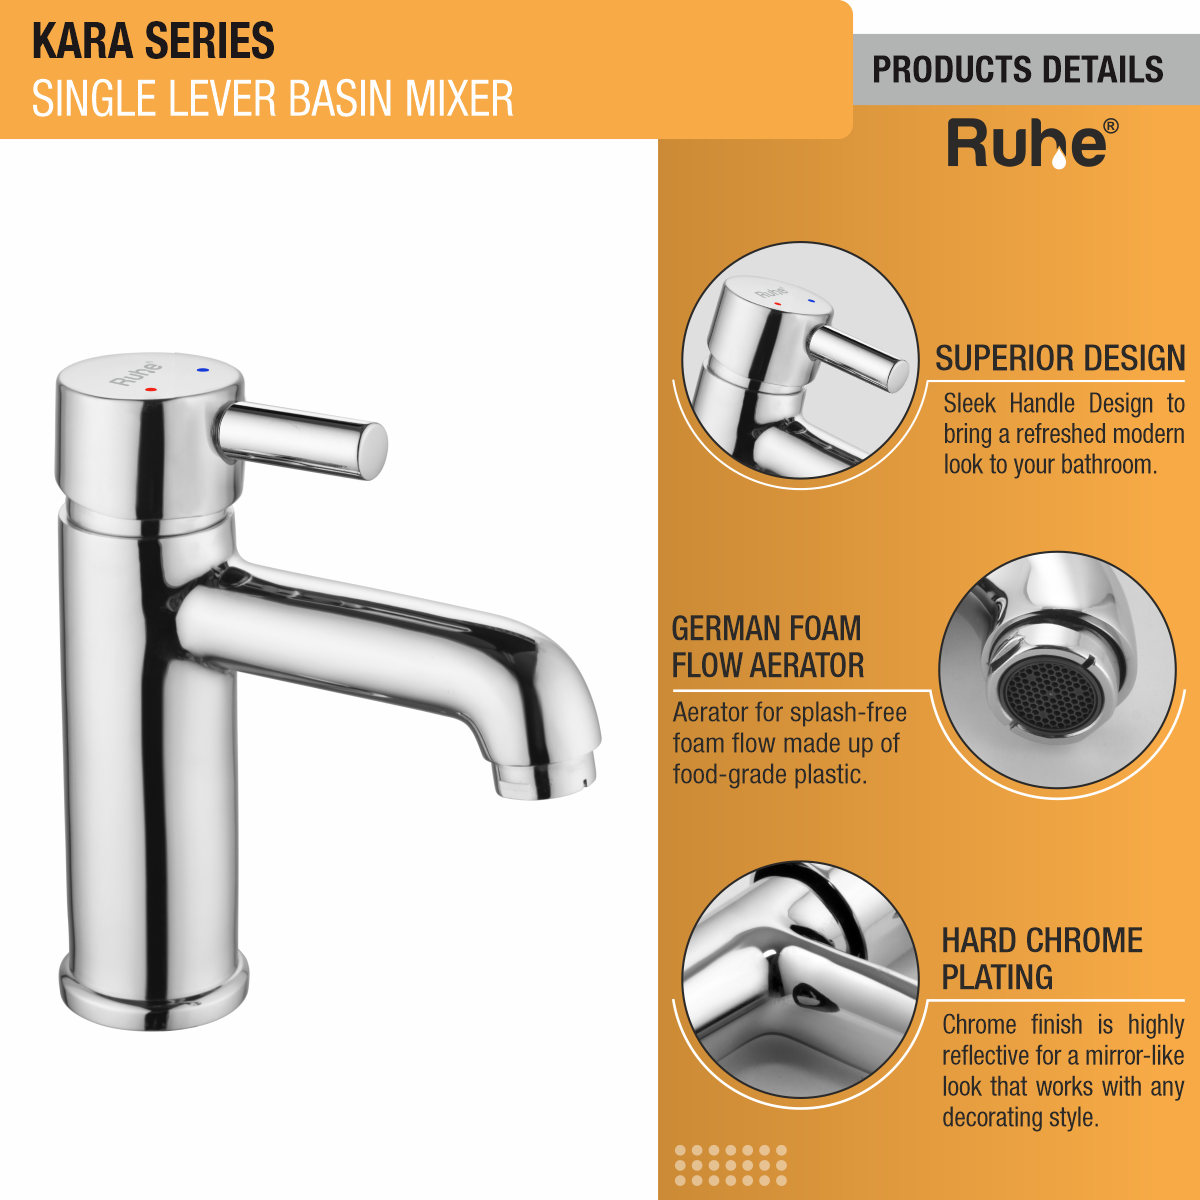 Kara Single Lever Basin Mixer Brass Faucet product details